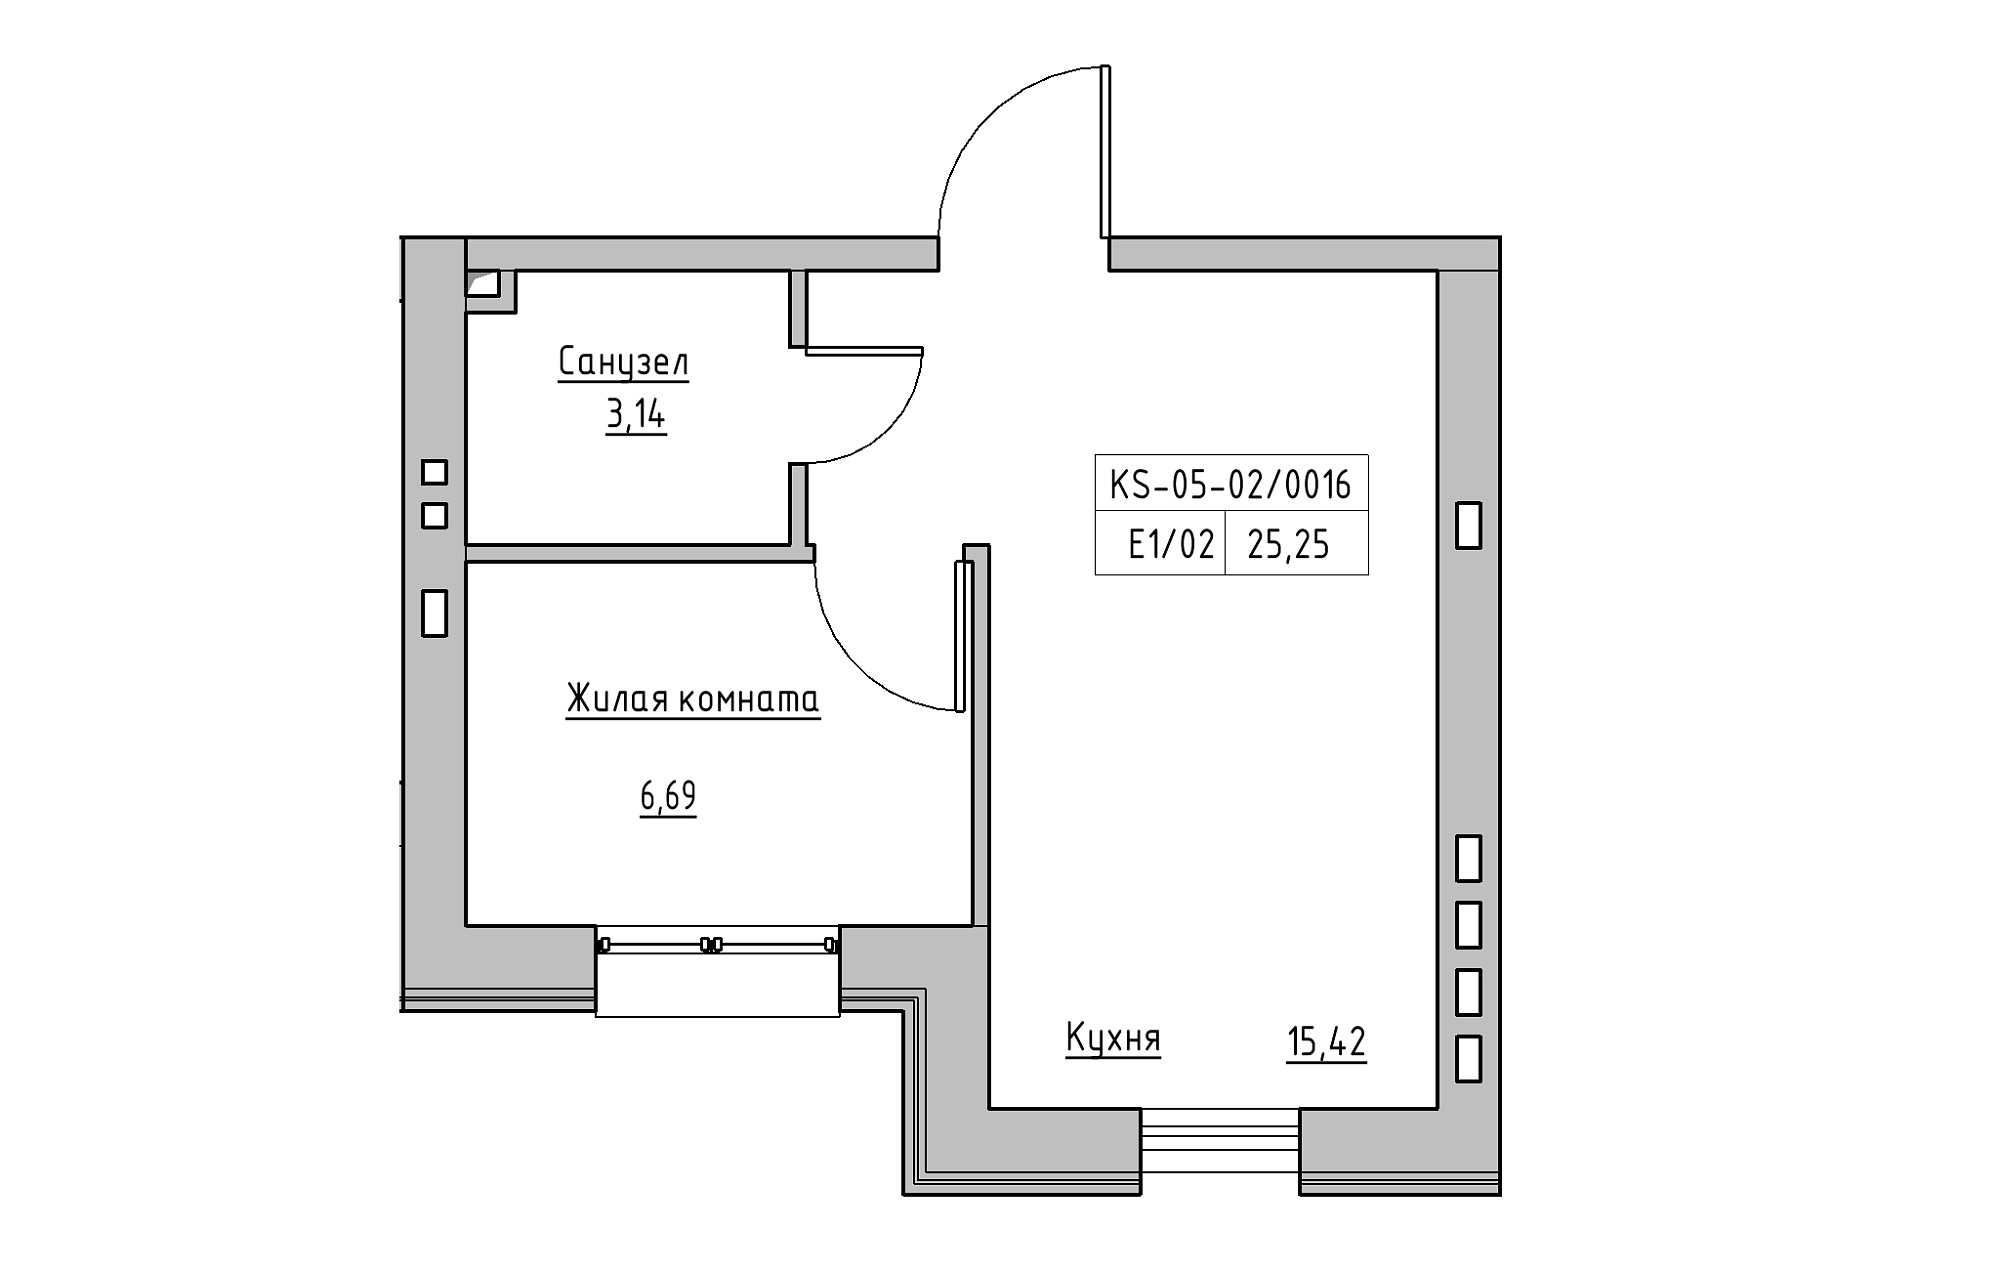 Planning 1-rm flats area 25.25m2, KS-005-05/0016.